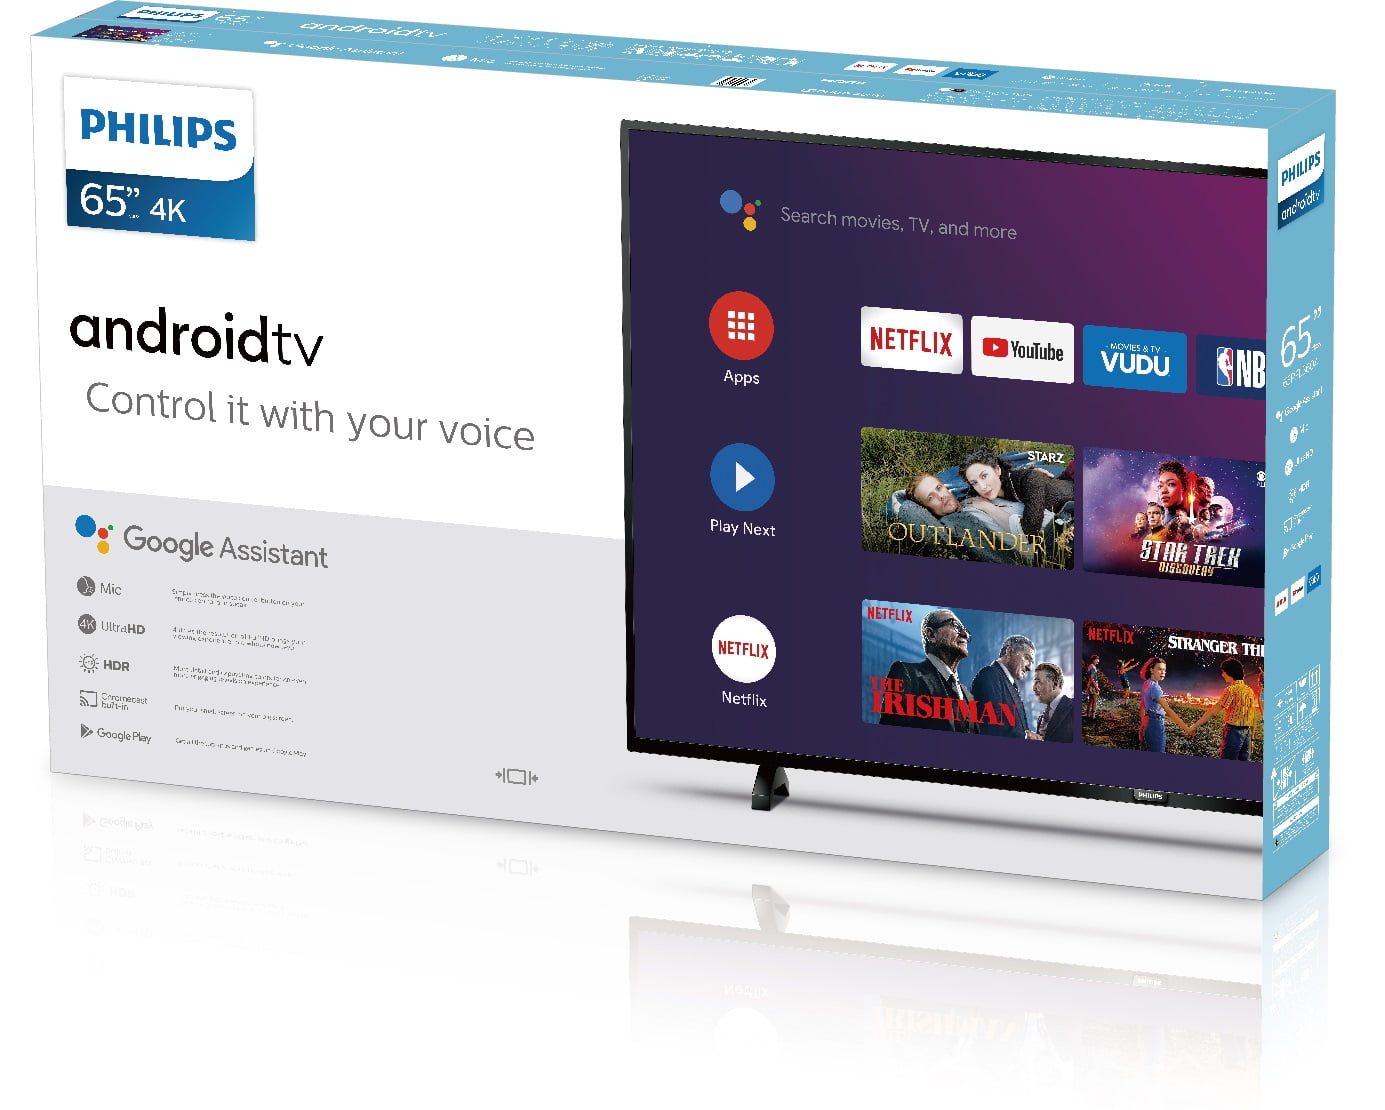 Гугл филипс. Philips Android TV 65. Philips Android TV.